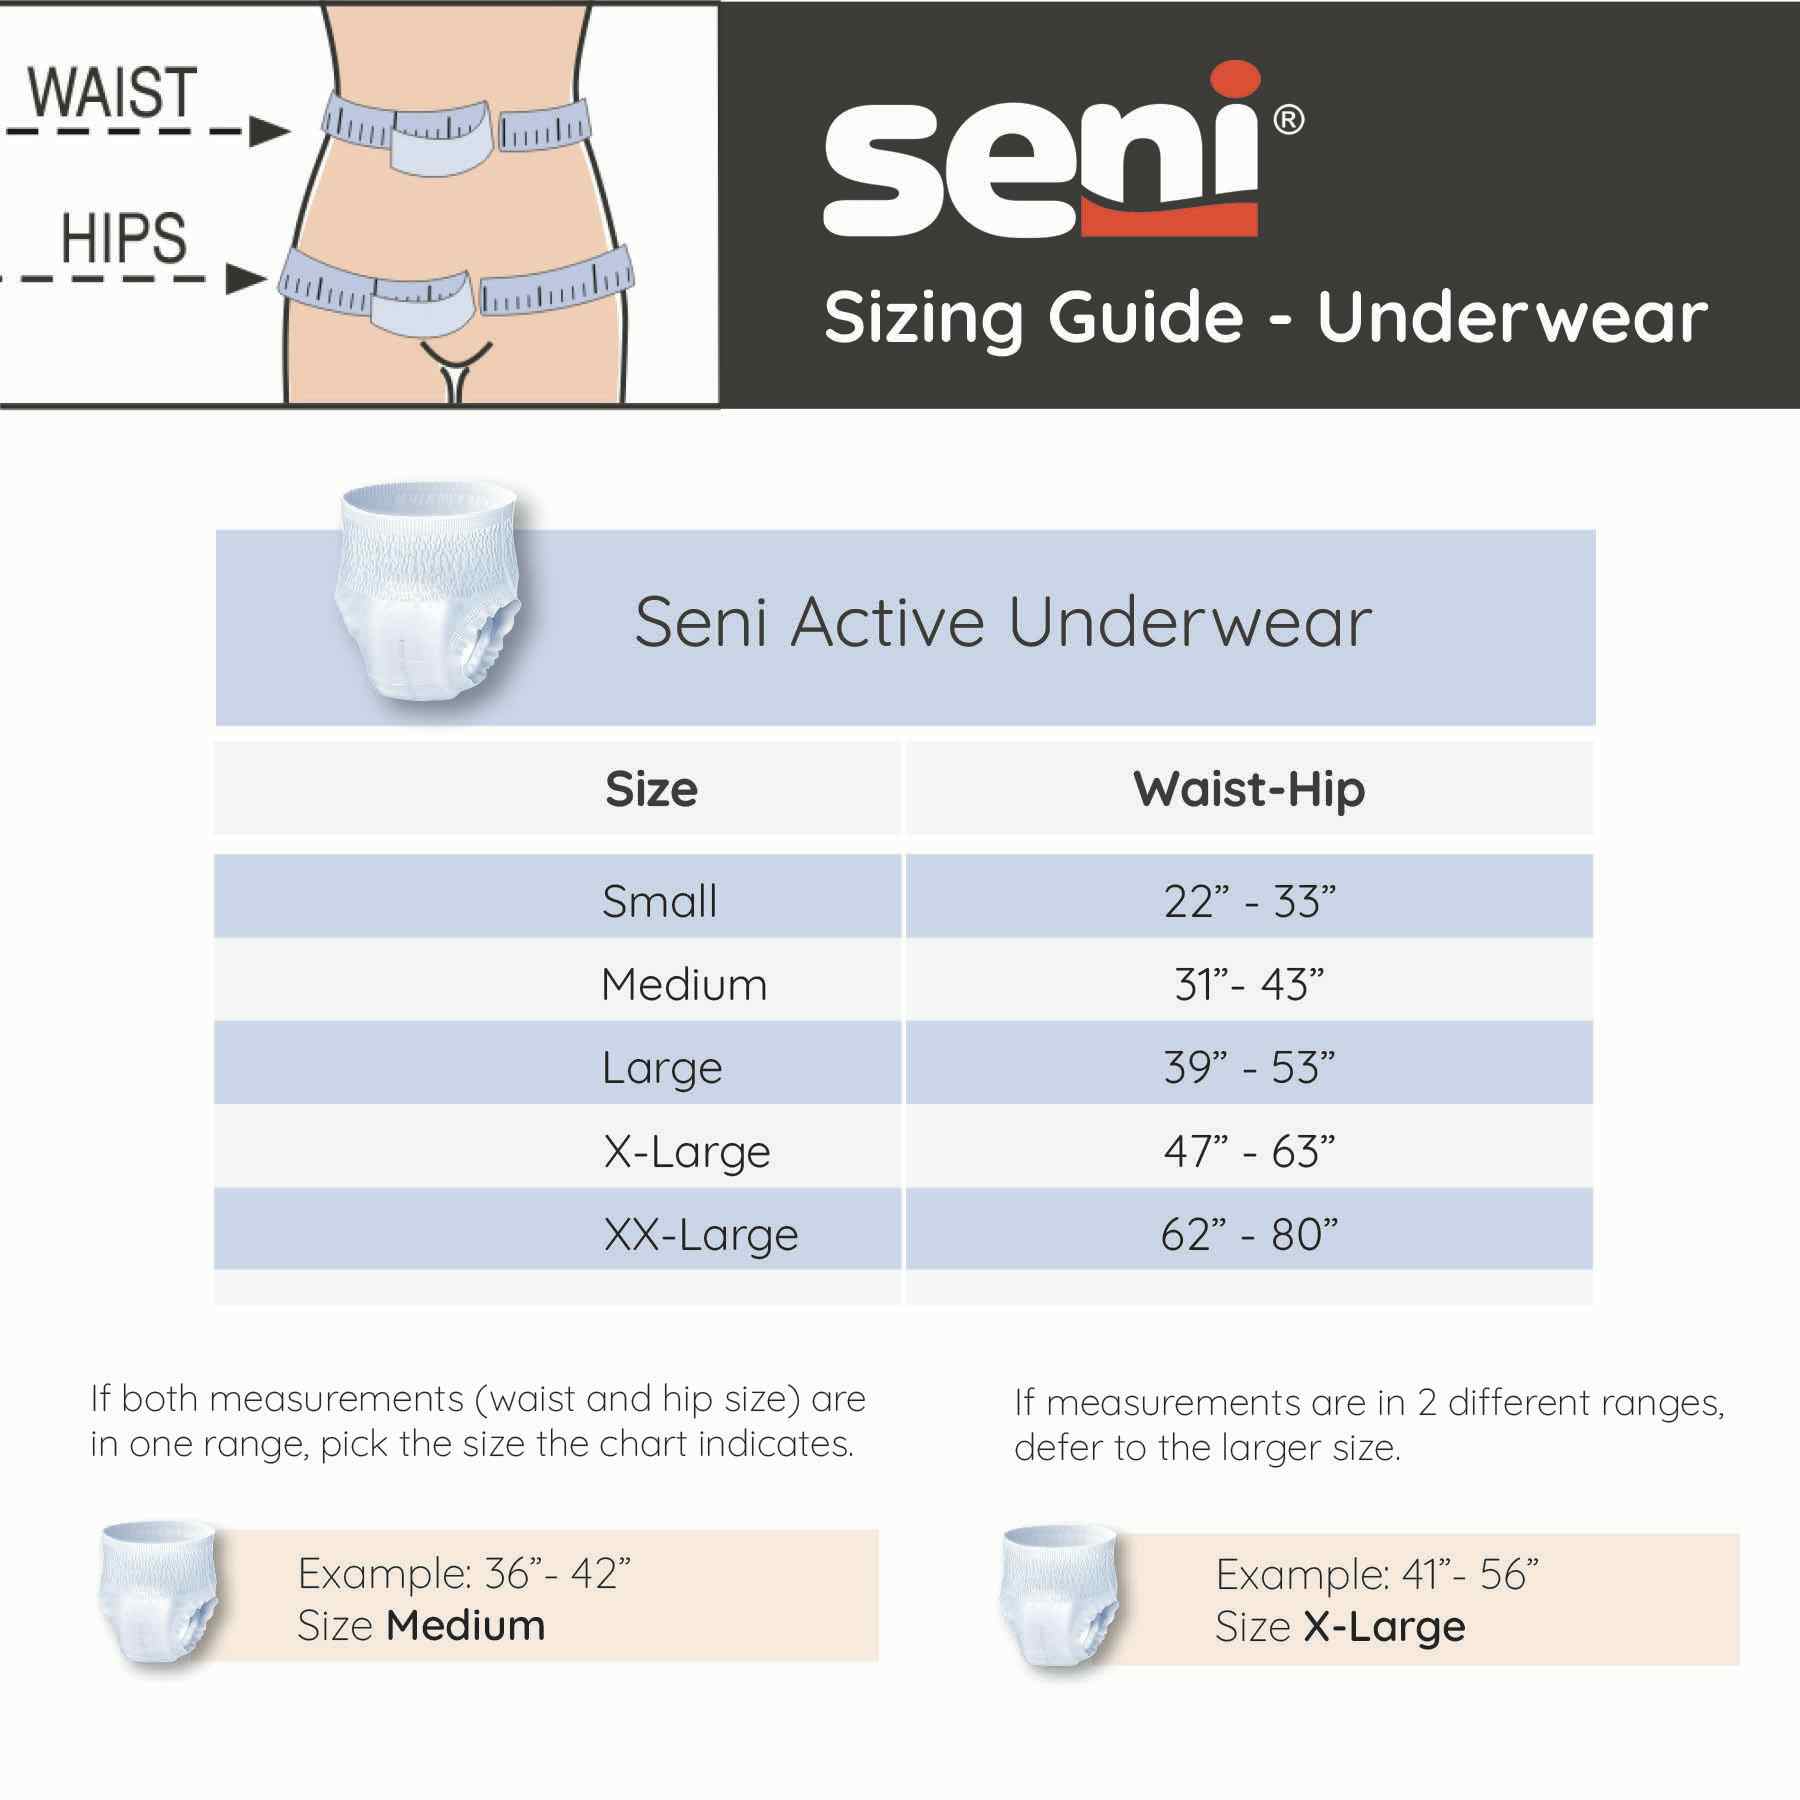 Seni Active Super Plus Underwear